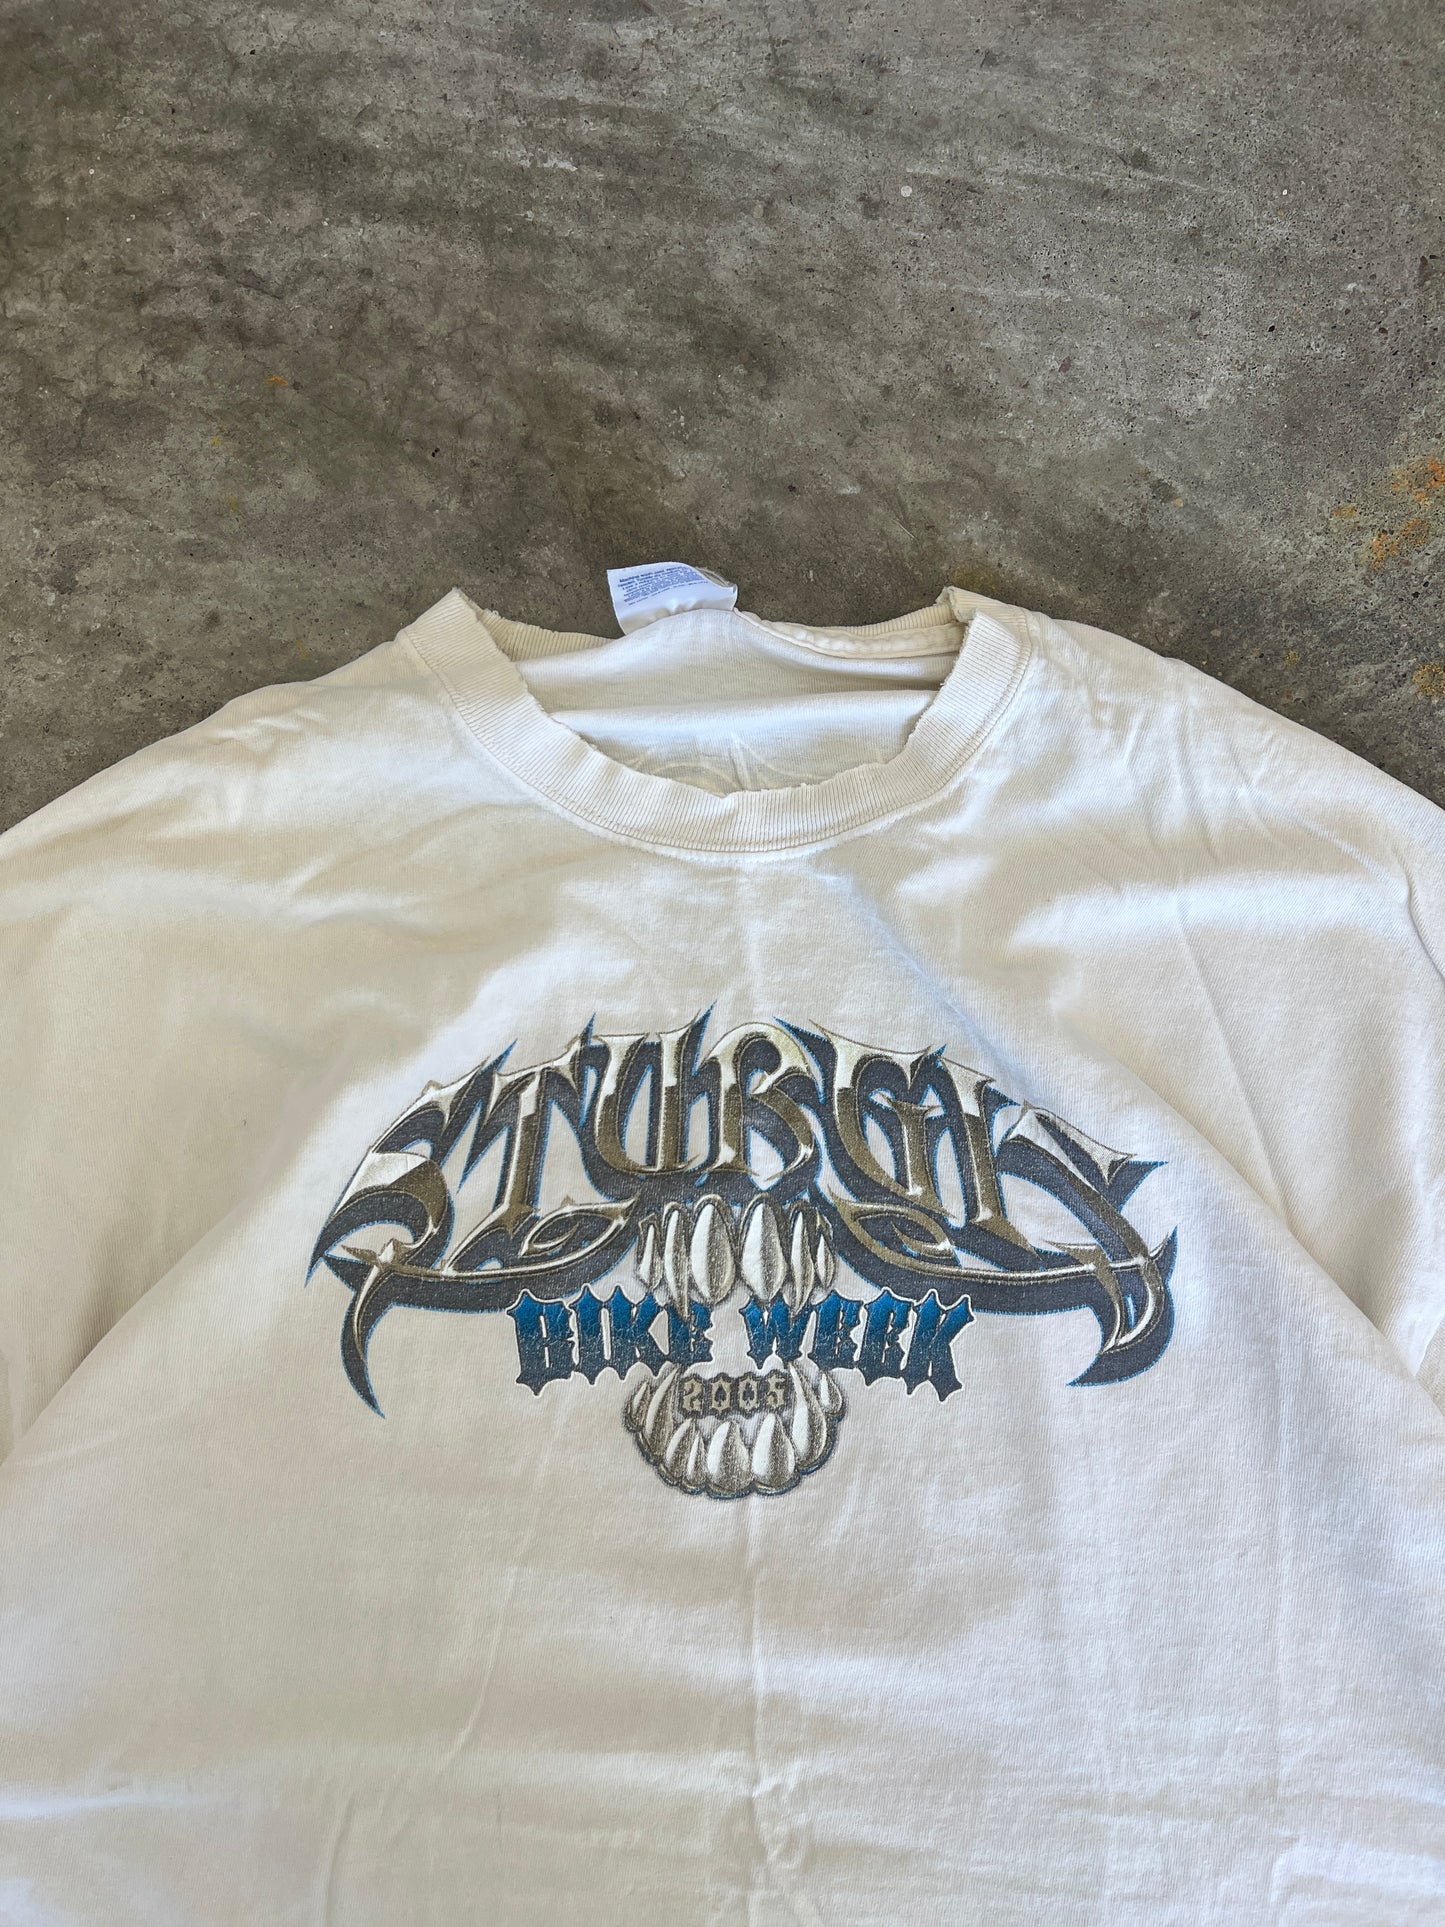 Vintage Sturgis Bike Week Shirt - XL